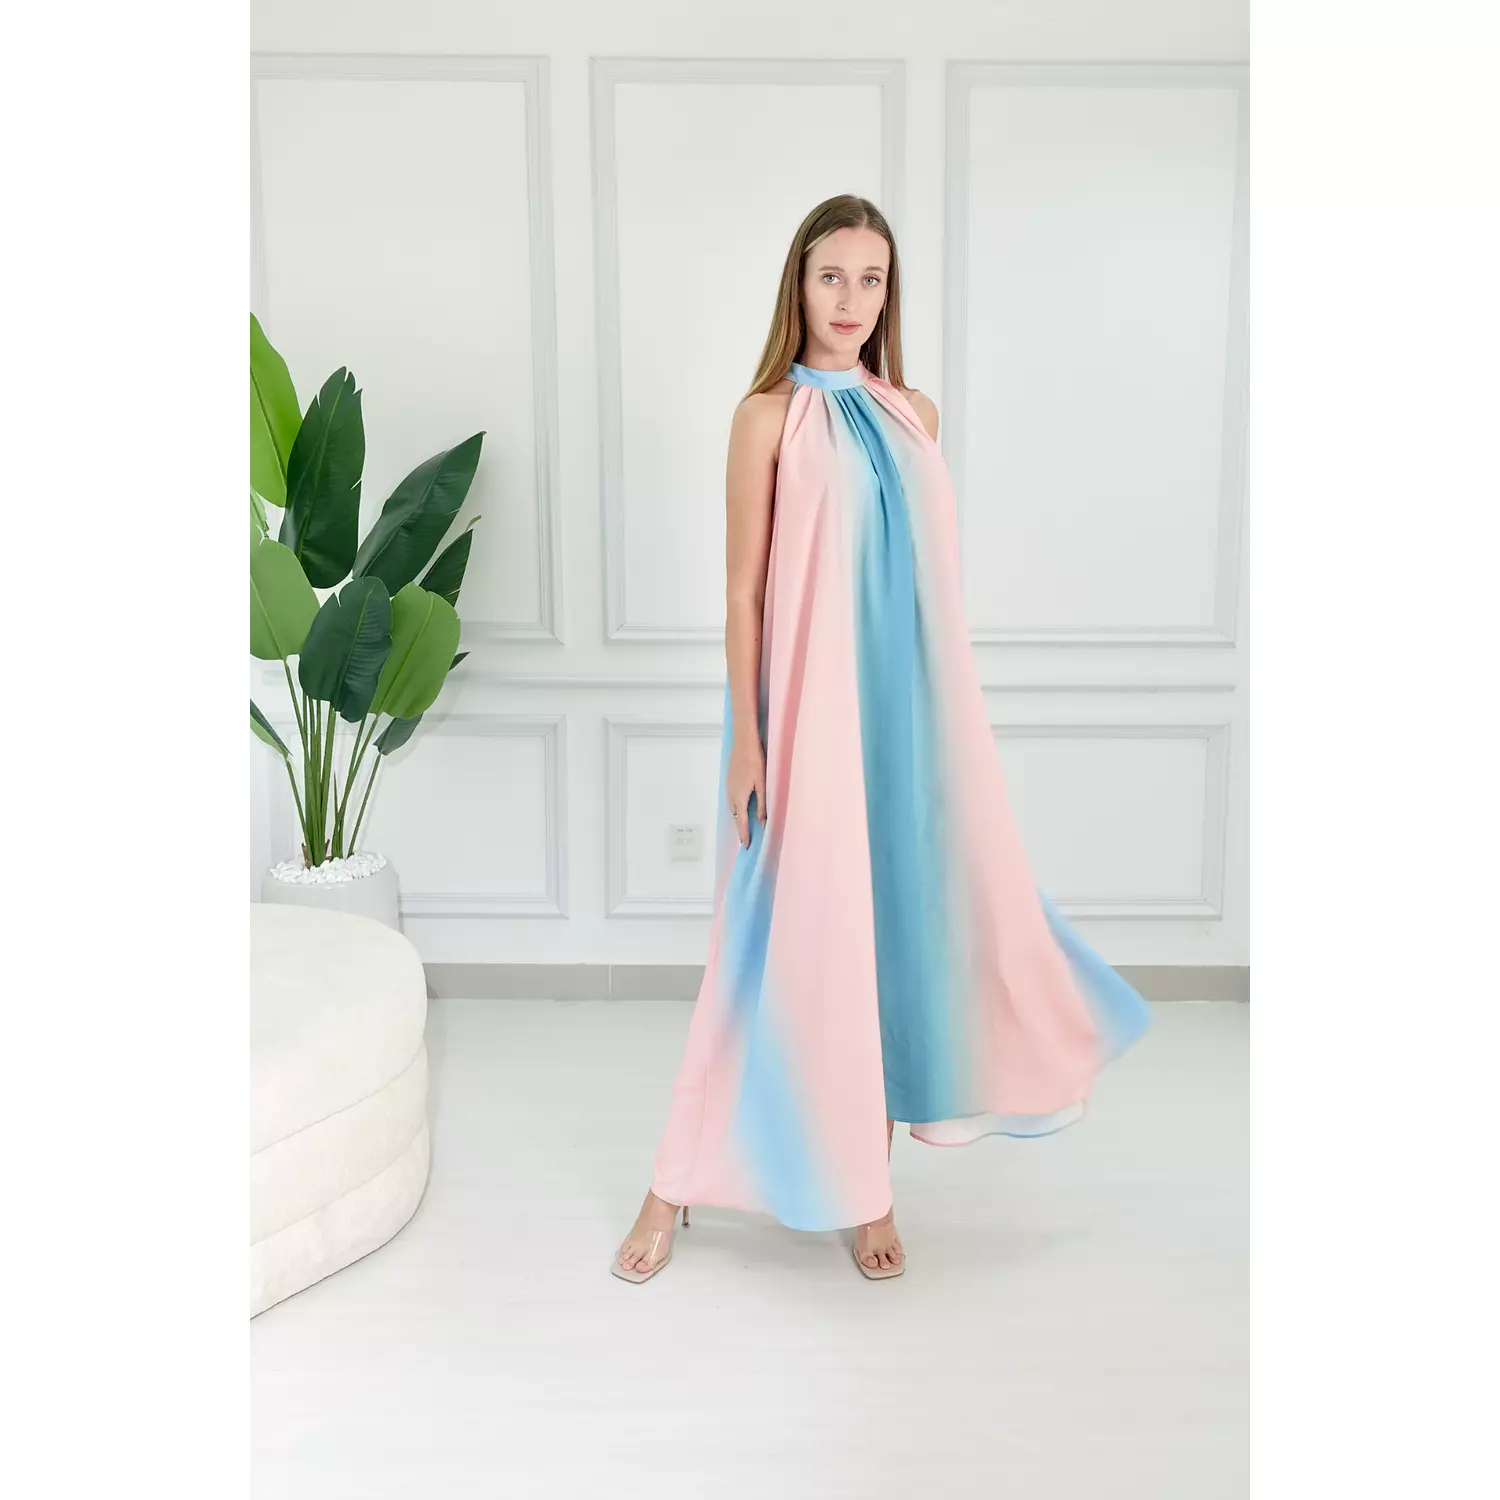 Colorful Sleeveless Dress 0